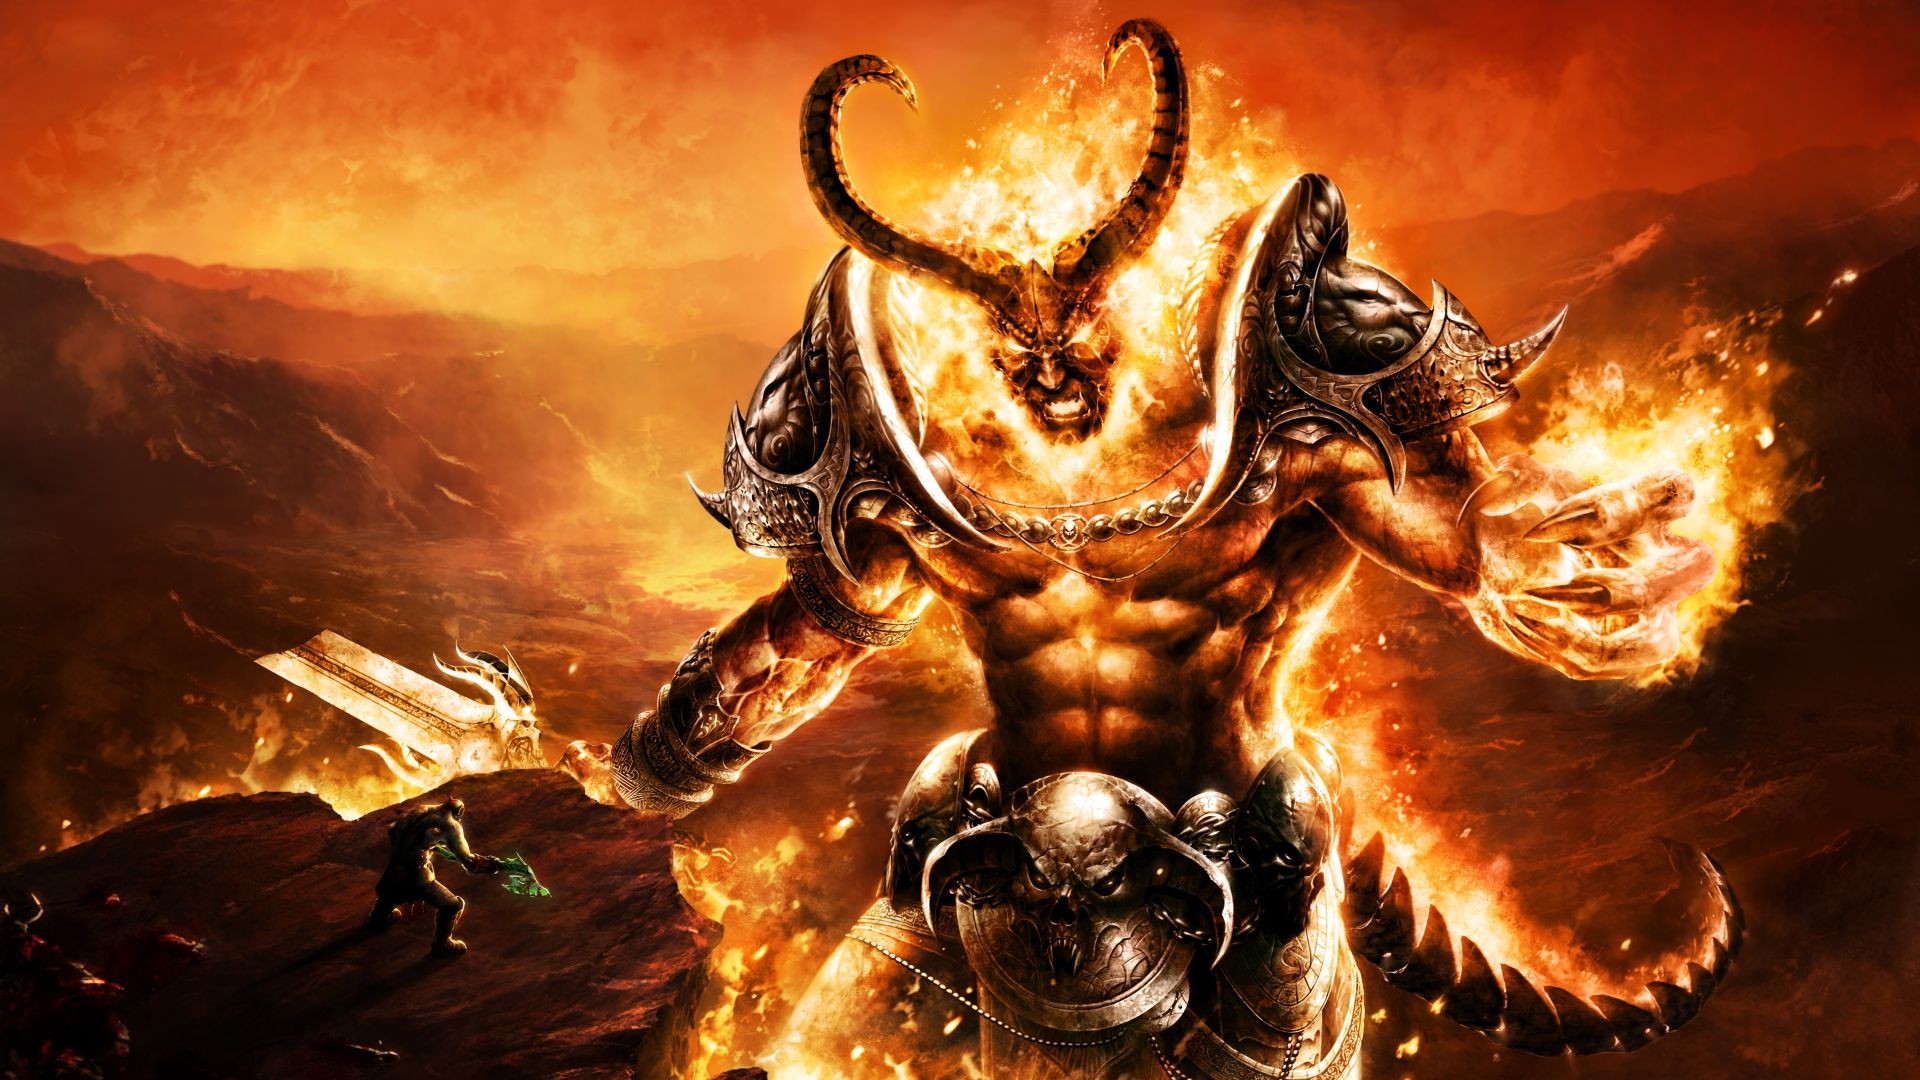 Download Fantasy Demon Wallpaper. Full HD Wallpaper. World of warcraft wallpaper, Warcraft art, World of warcraft